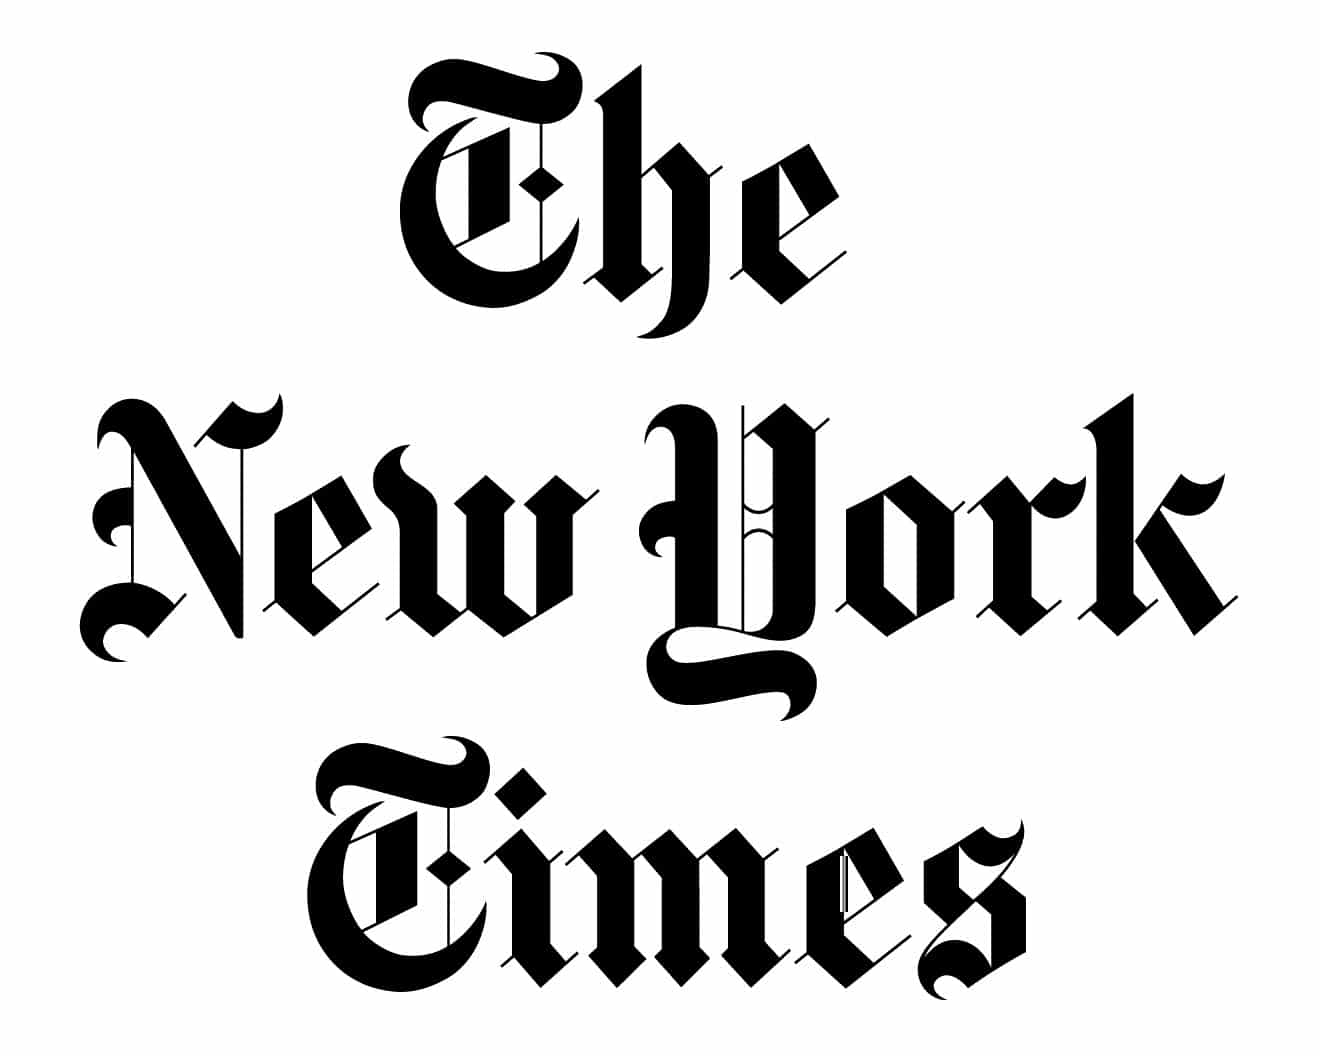 New_York_Times_logo_variation